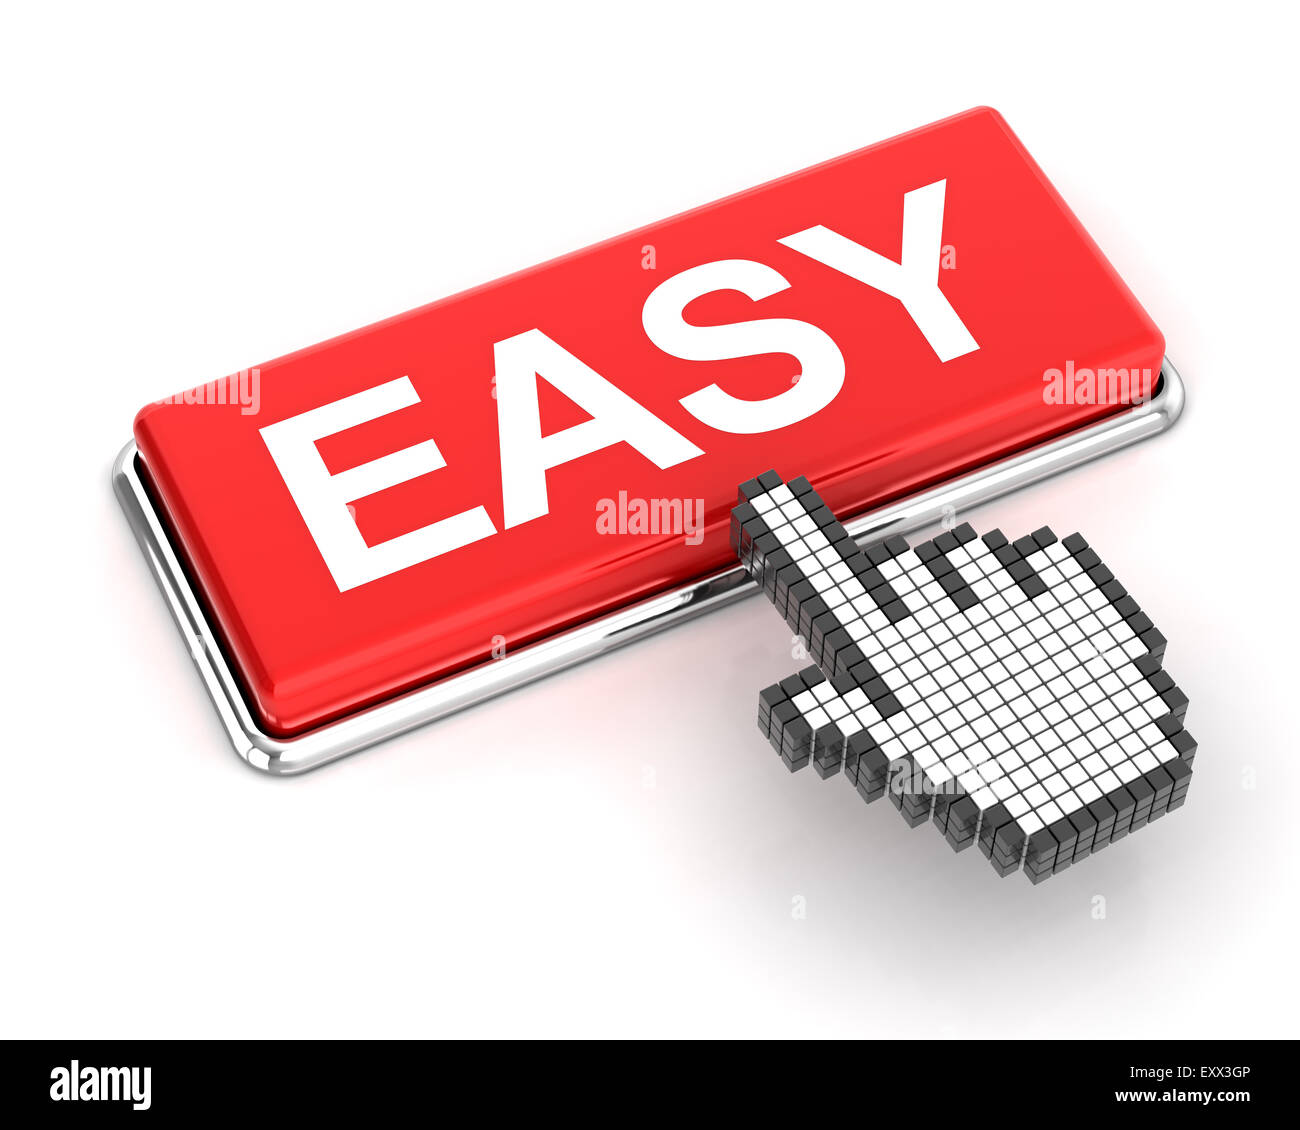 Hand cursor clicking an easy button Stock Photo - Alamy